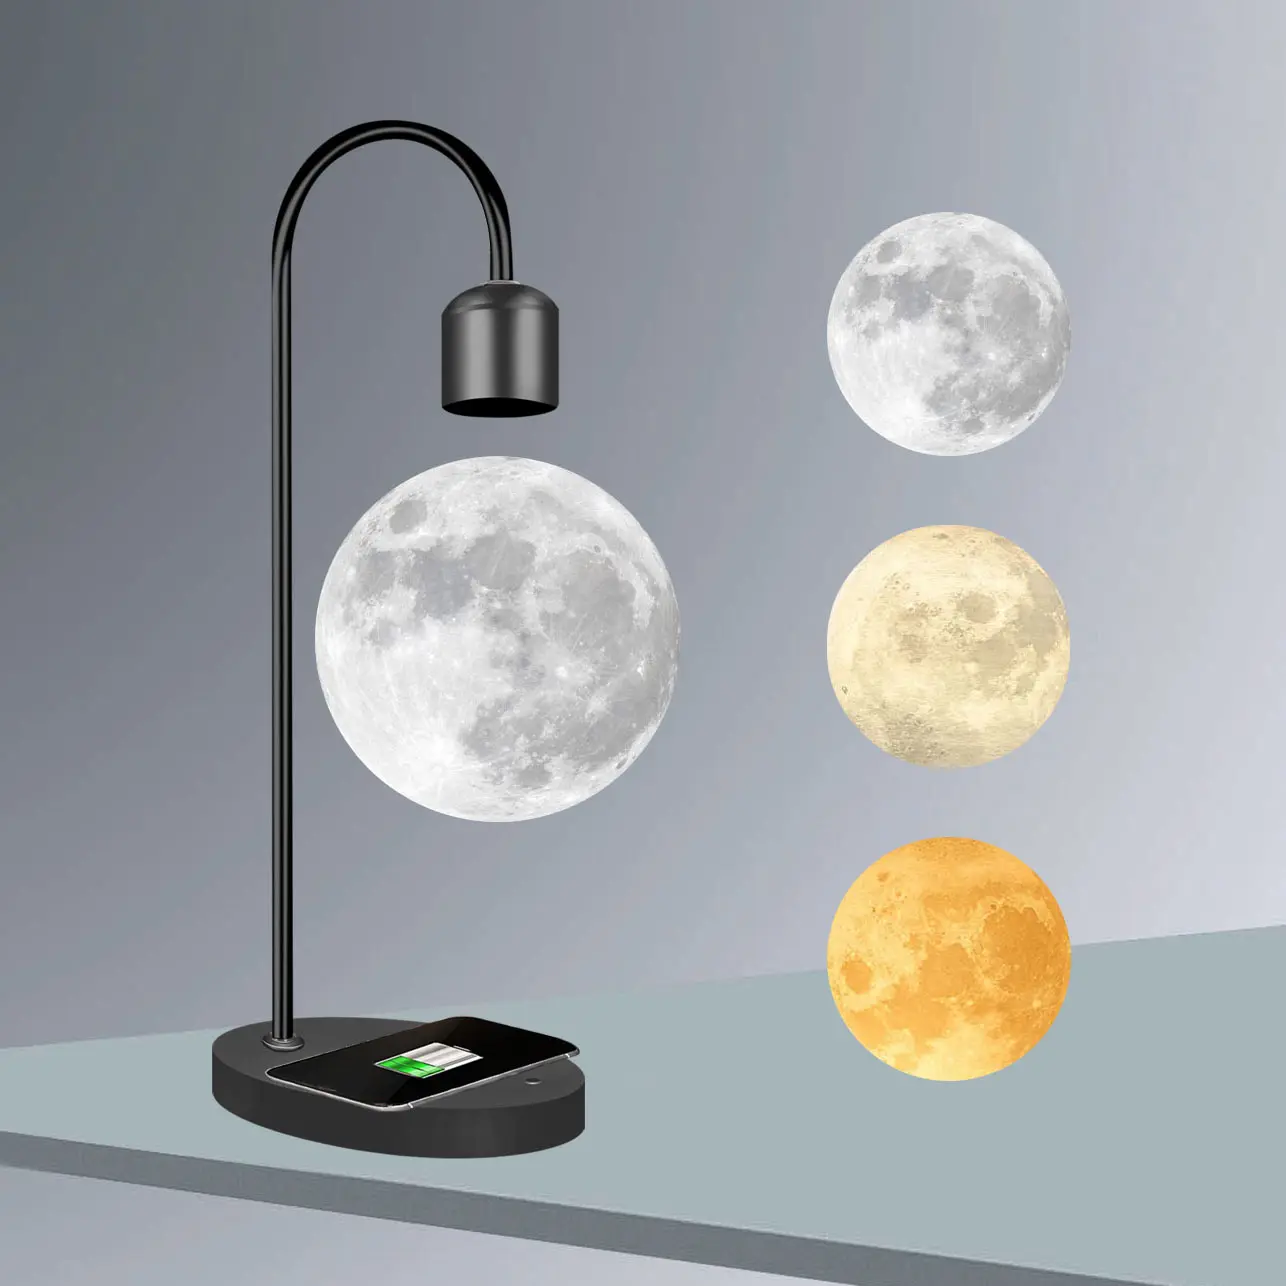 Color conmutable levitación magnética LED luz 3D mesa de levitación flotante lámpara de luna de levitación con cargador de teléfono inalámbrico